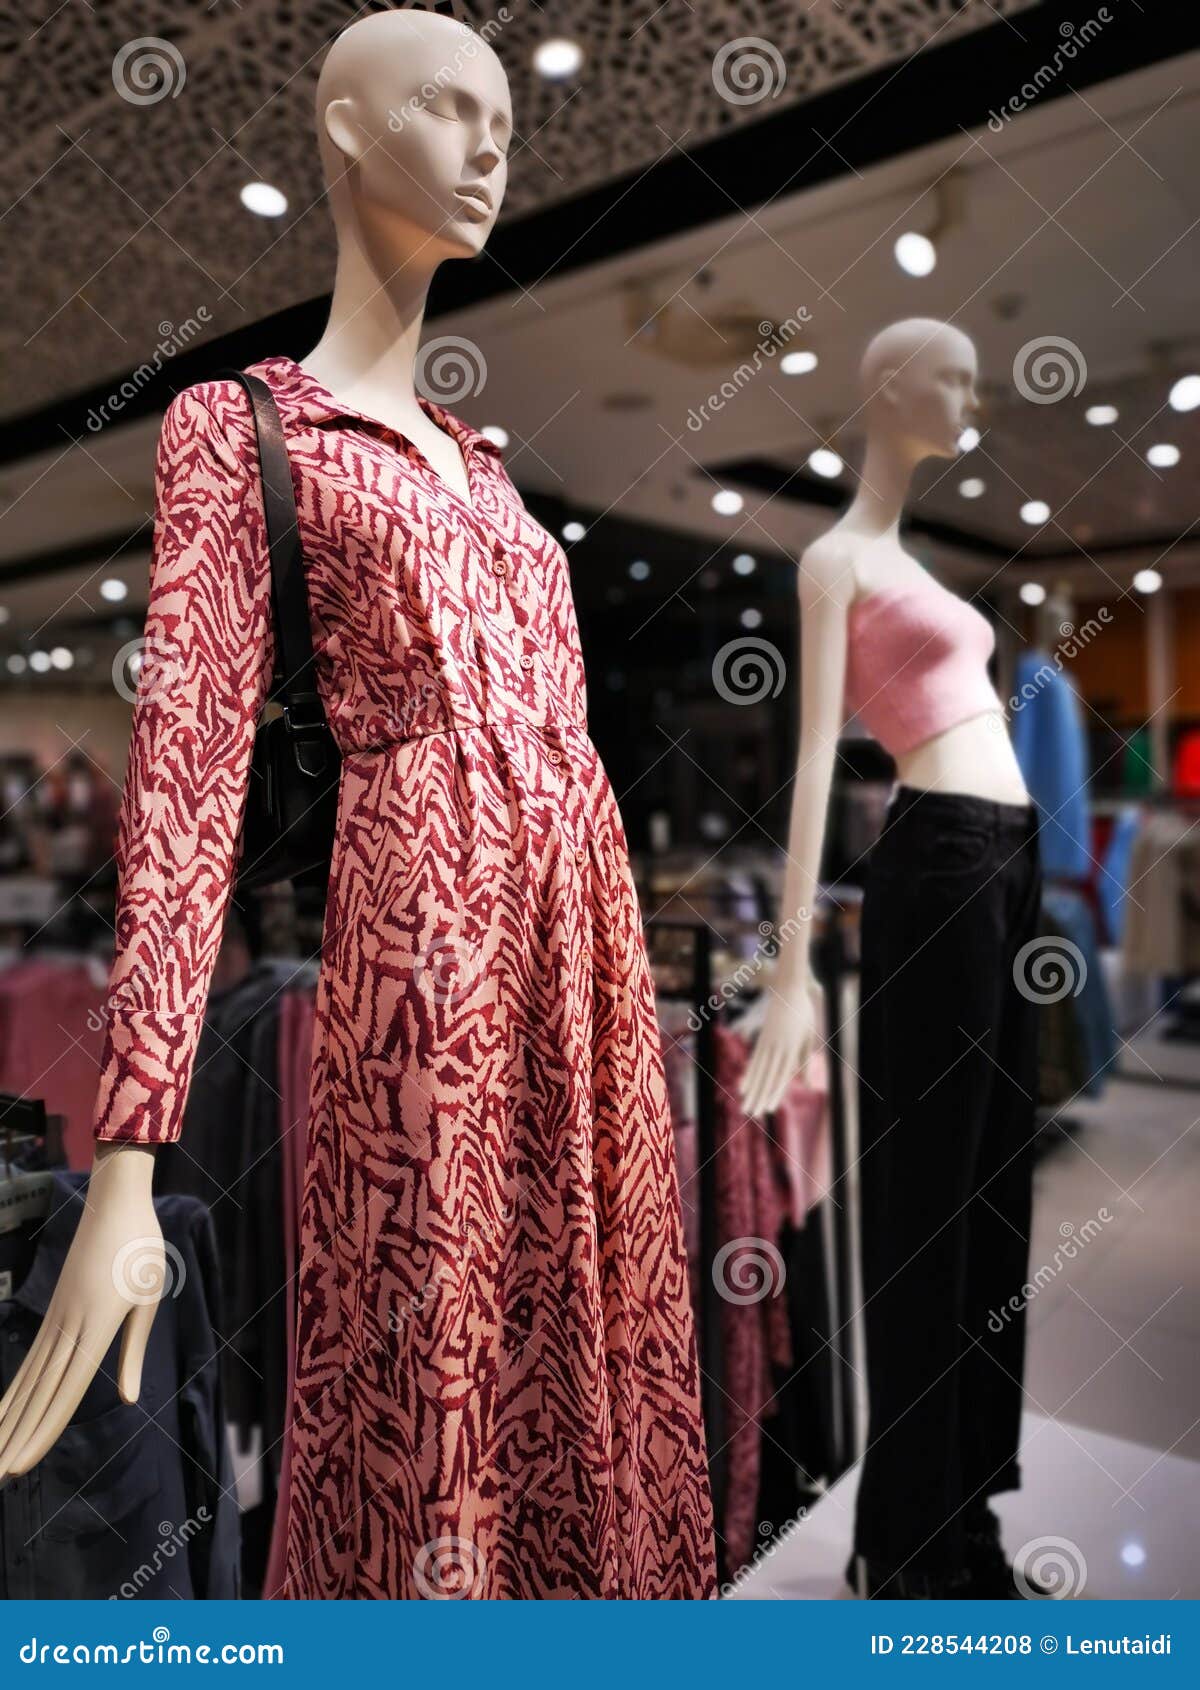 Fashion Dummy Dress And Clothing For Women Stock Photo Image Of Shirt